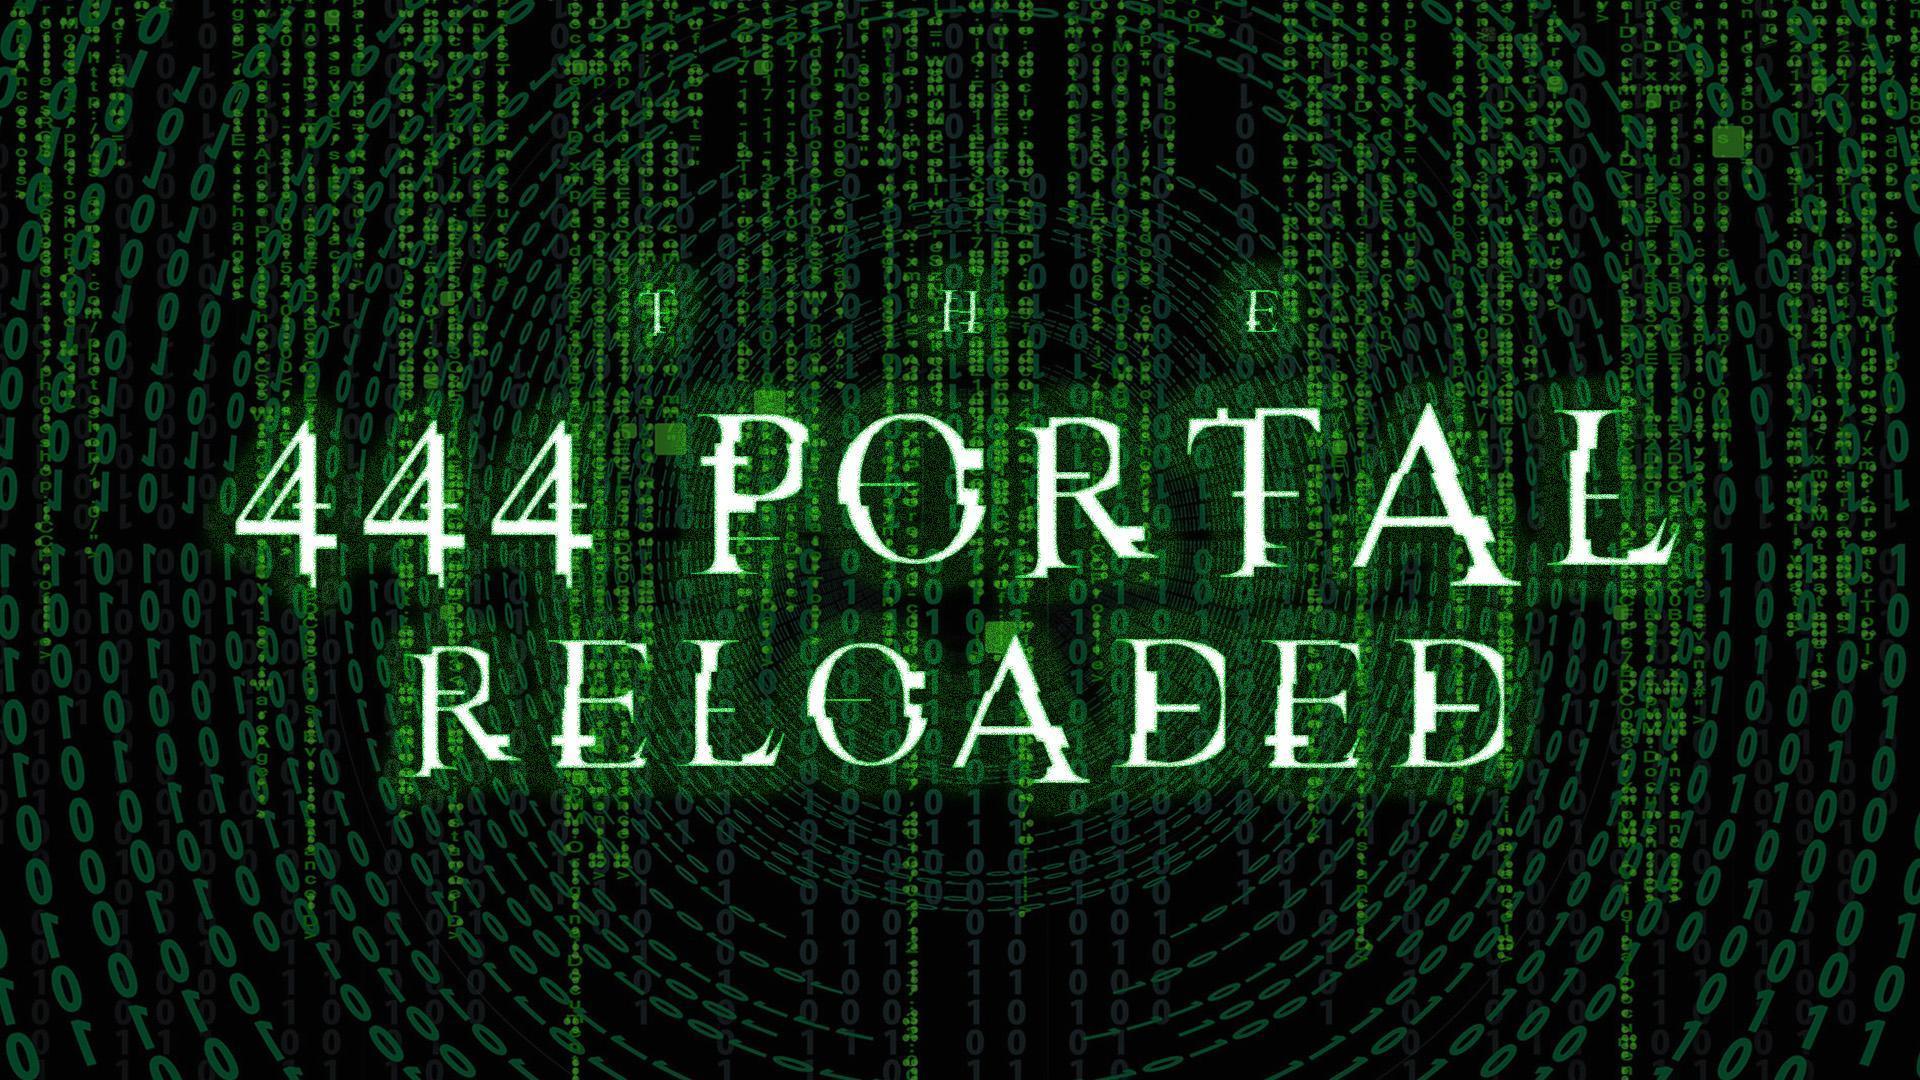 444 portal